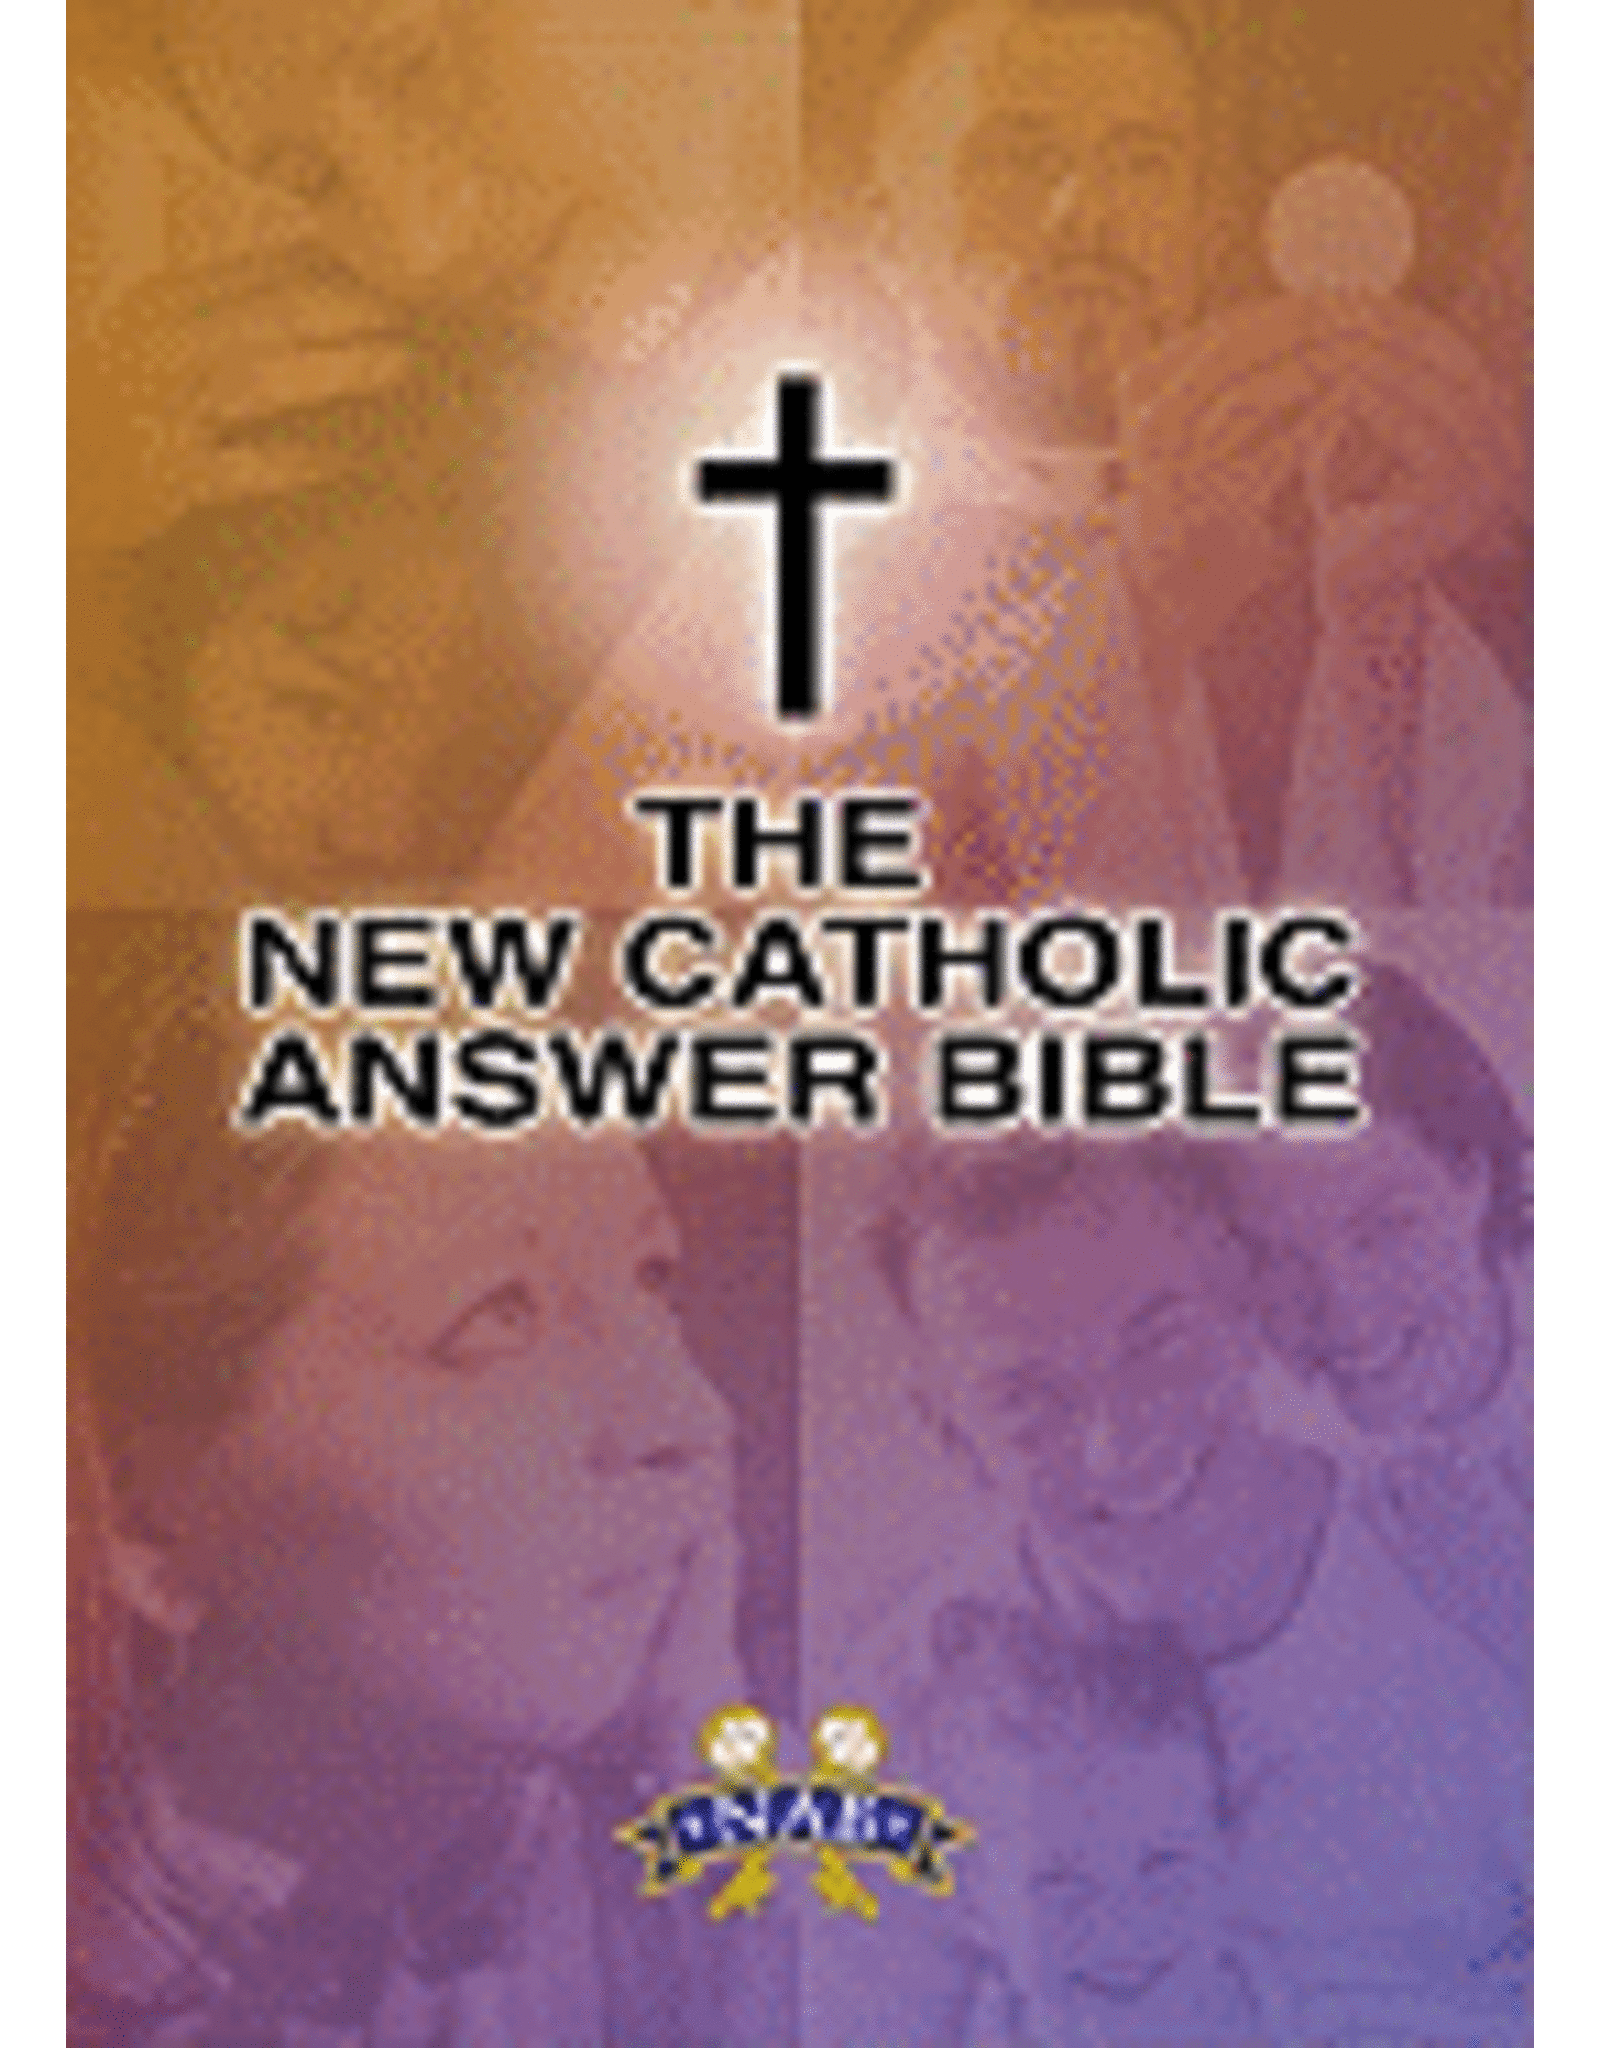 OSV (Our Sunday Visitor) The New Catholic Answer Bible